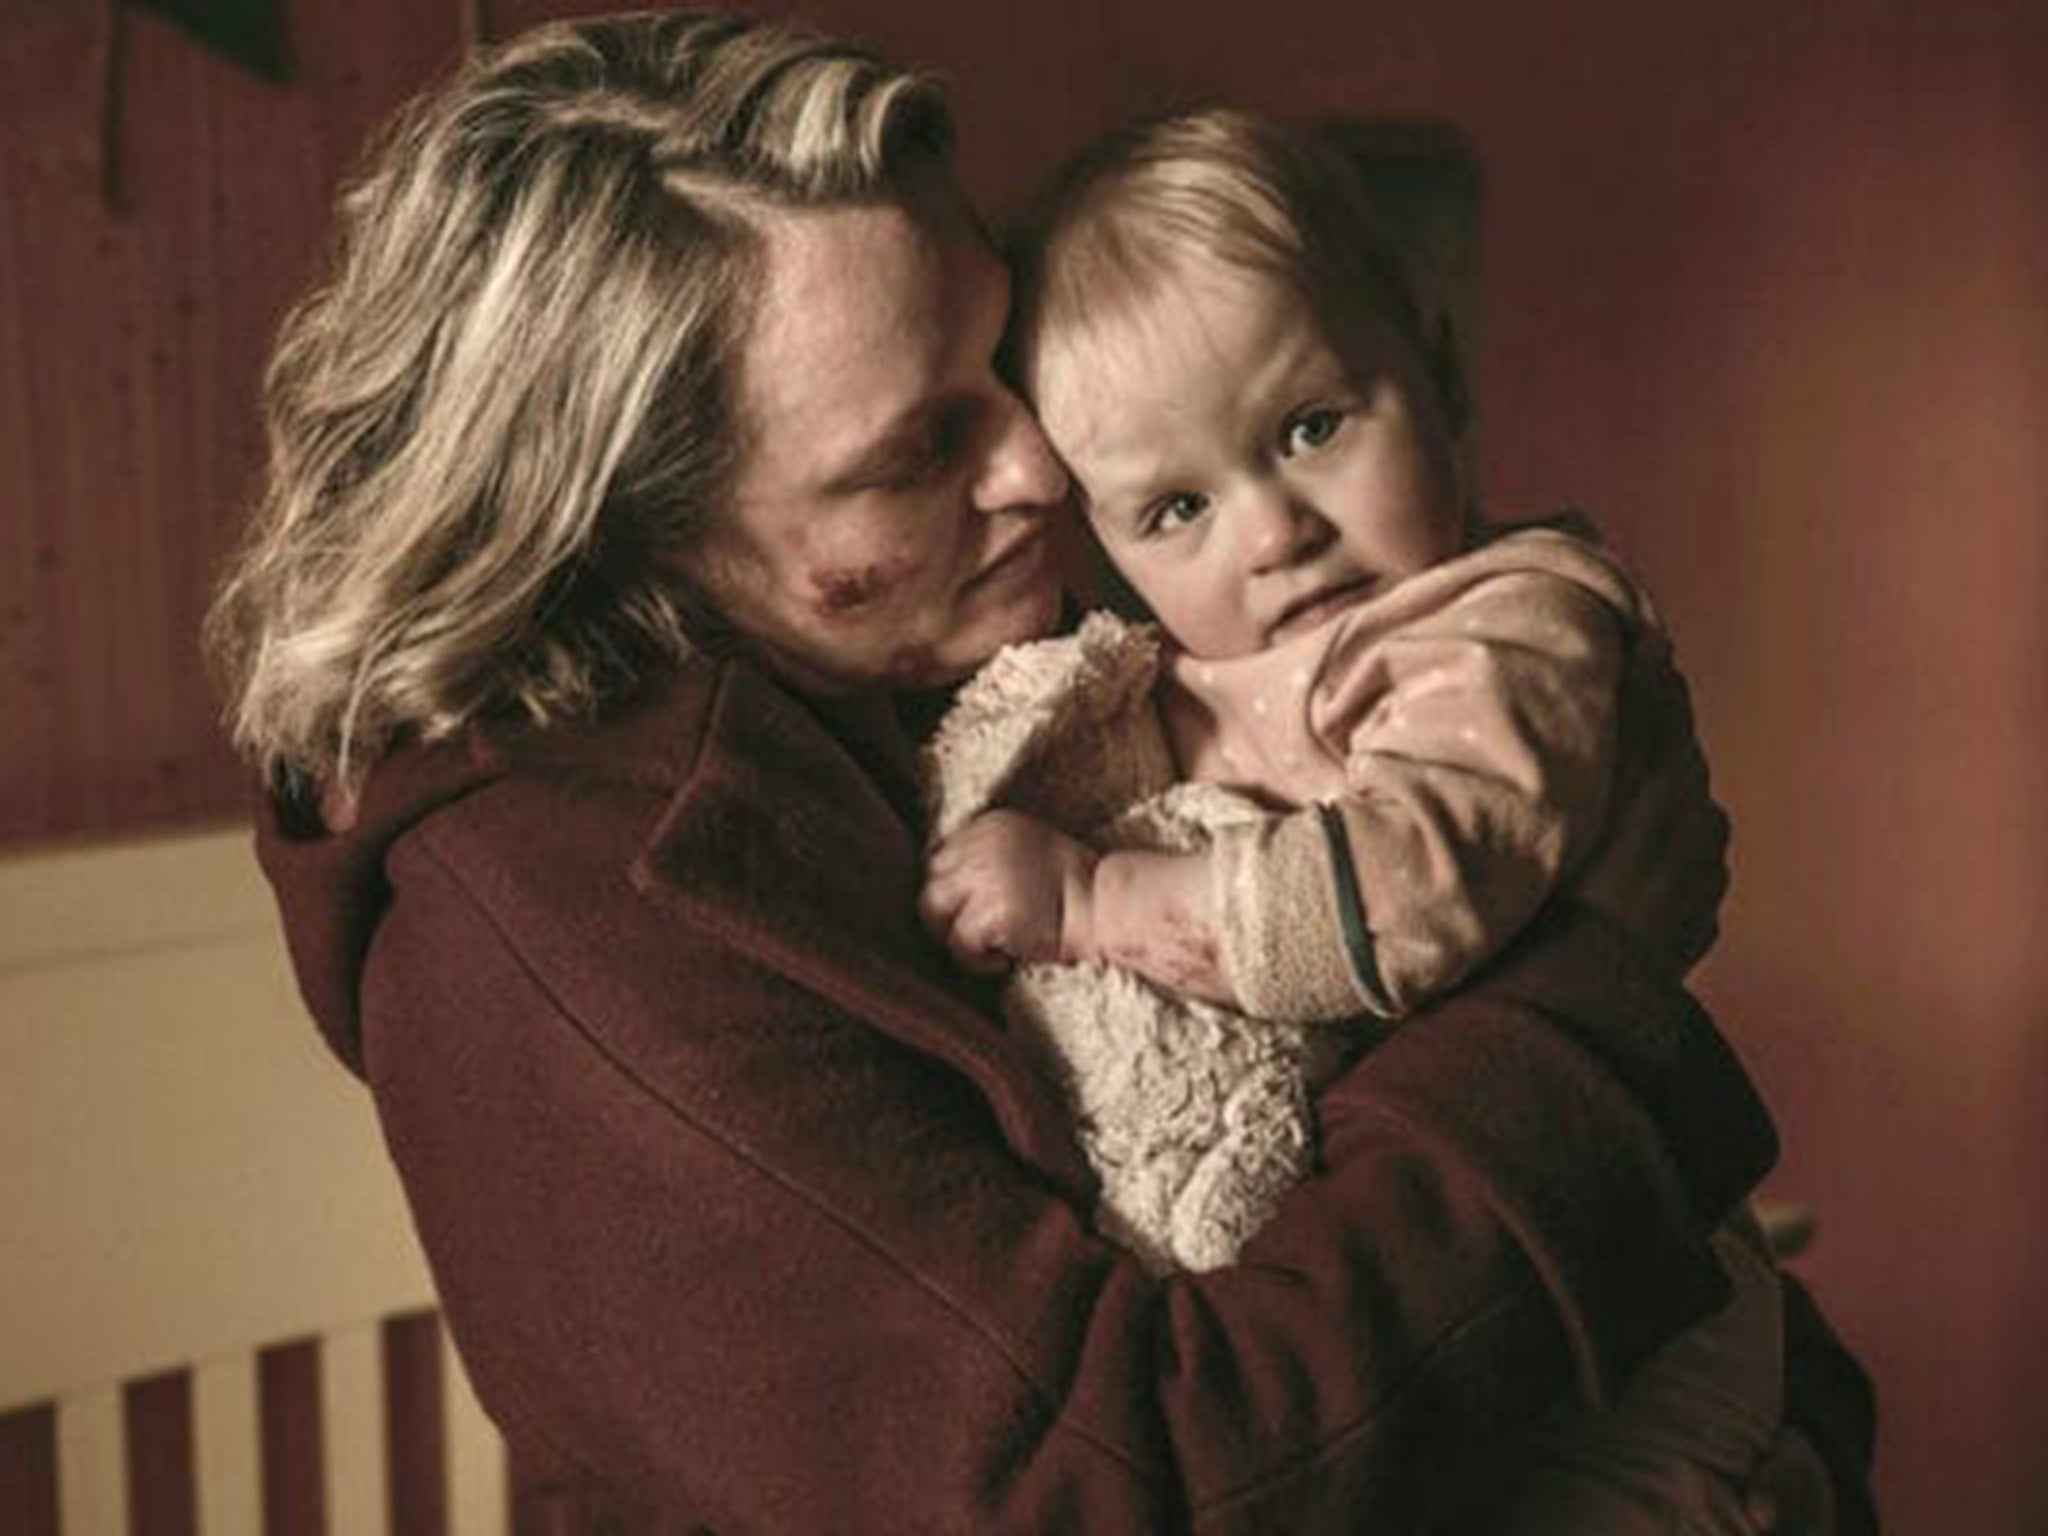 June Osborne (Elisabeth Moss) returns home to see her baby daughter